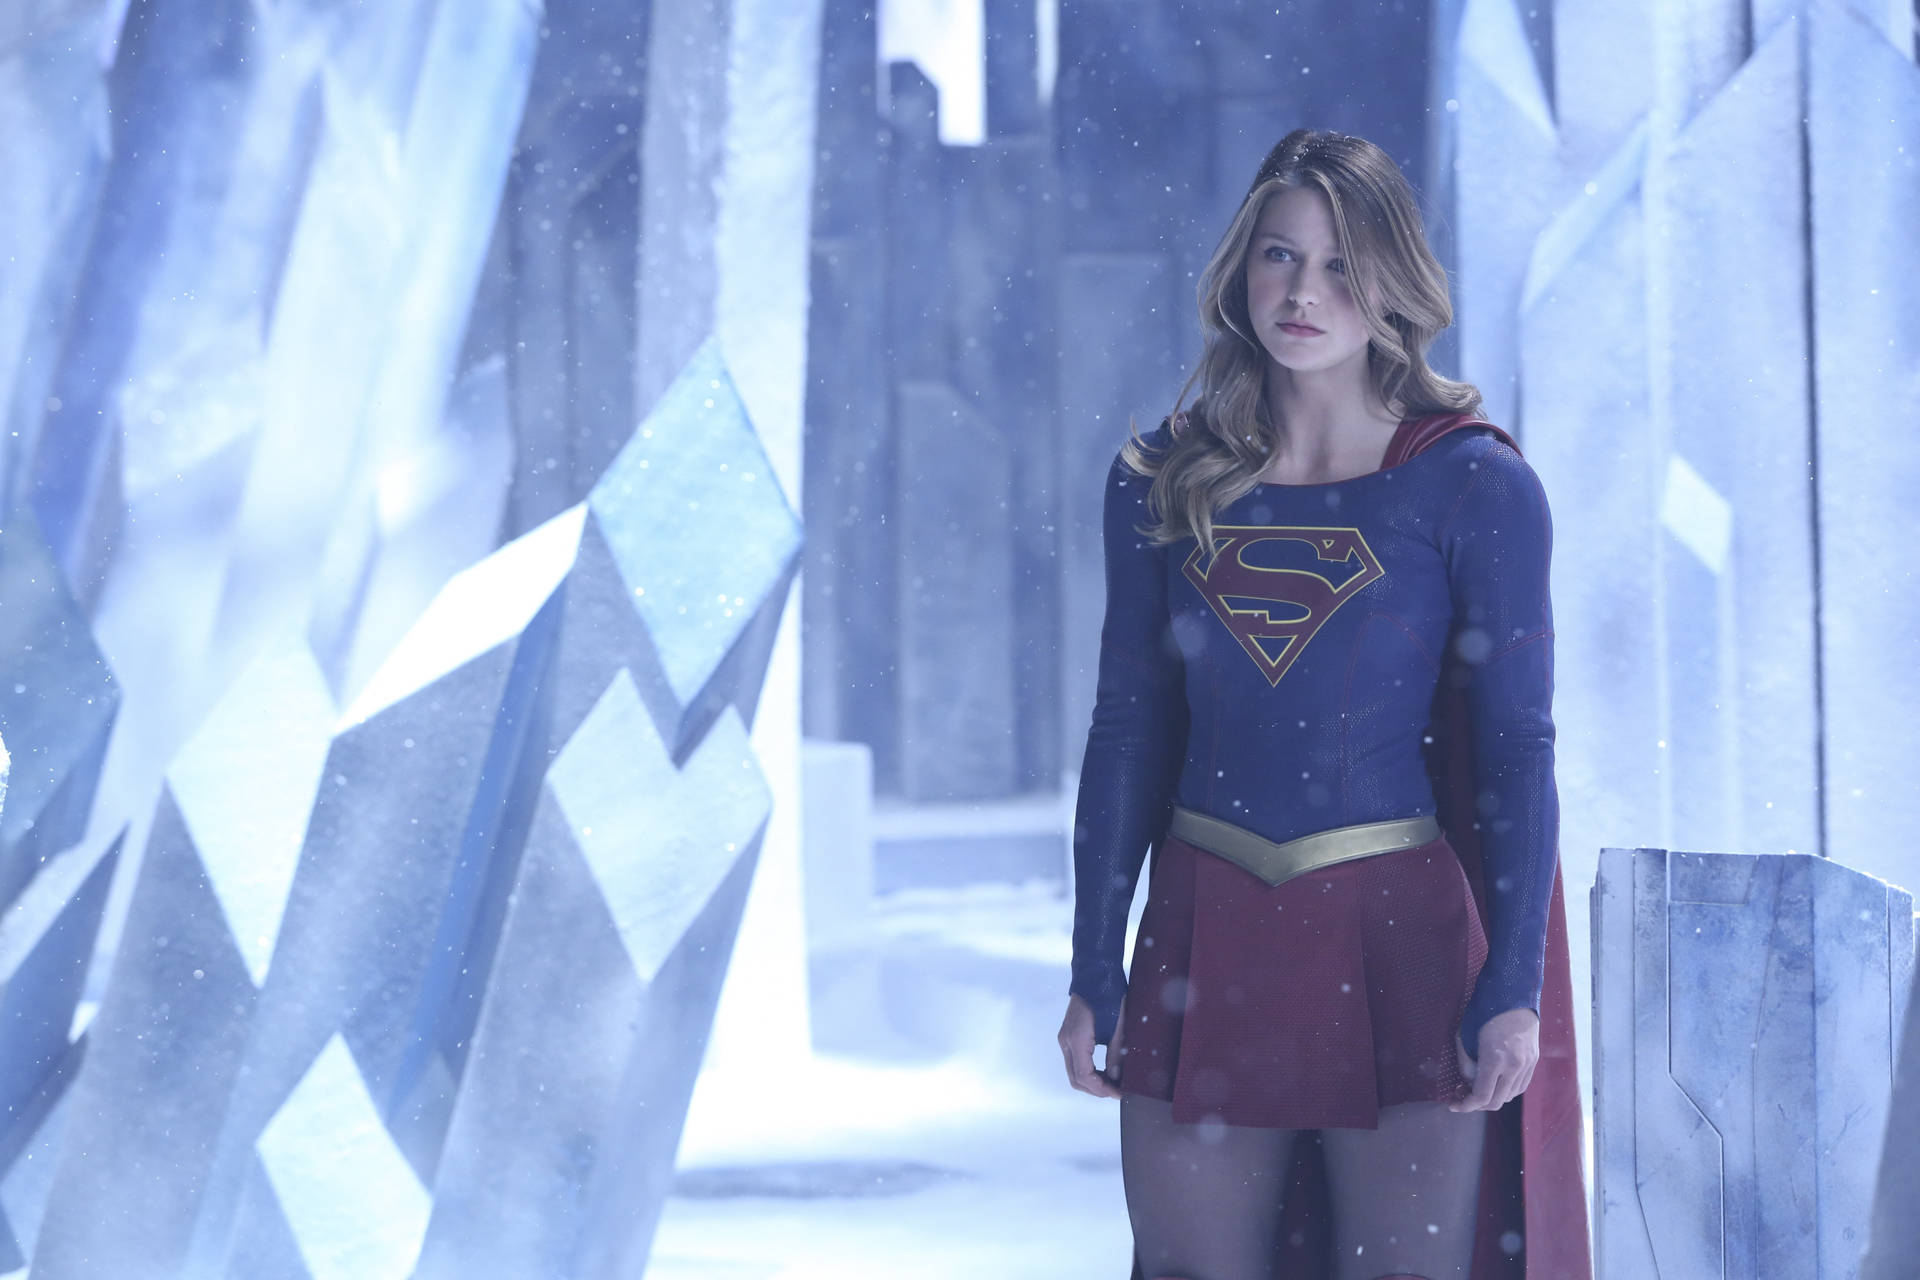 Melissa Benoist In Superhero Attire, Showcasing Her Role As Supergirl.